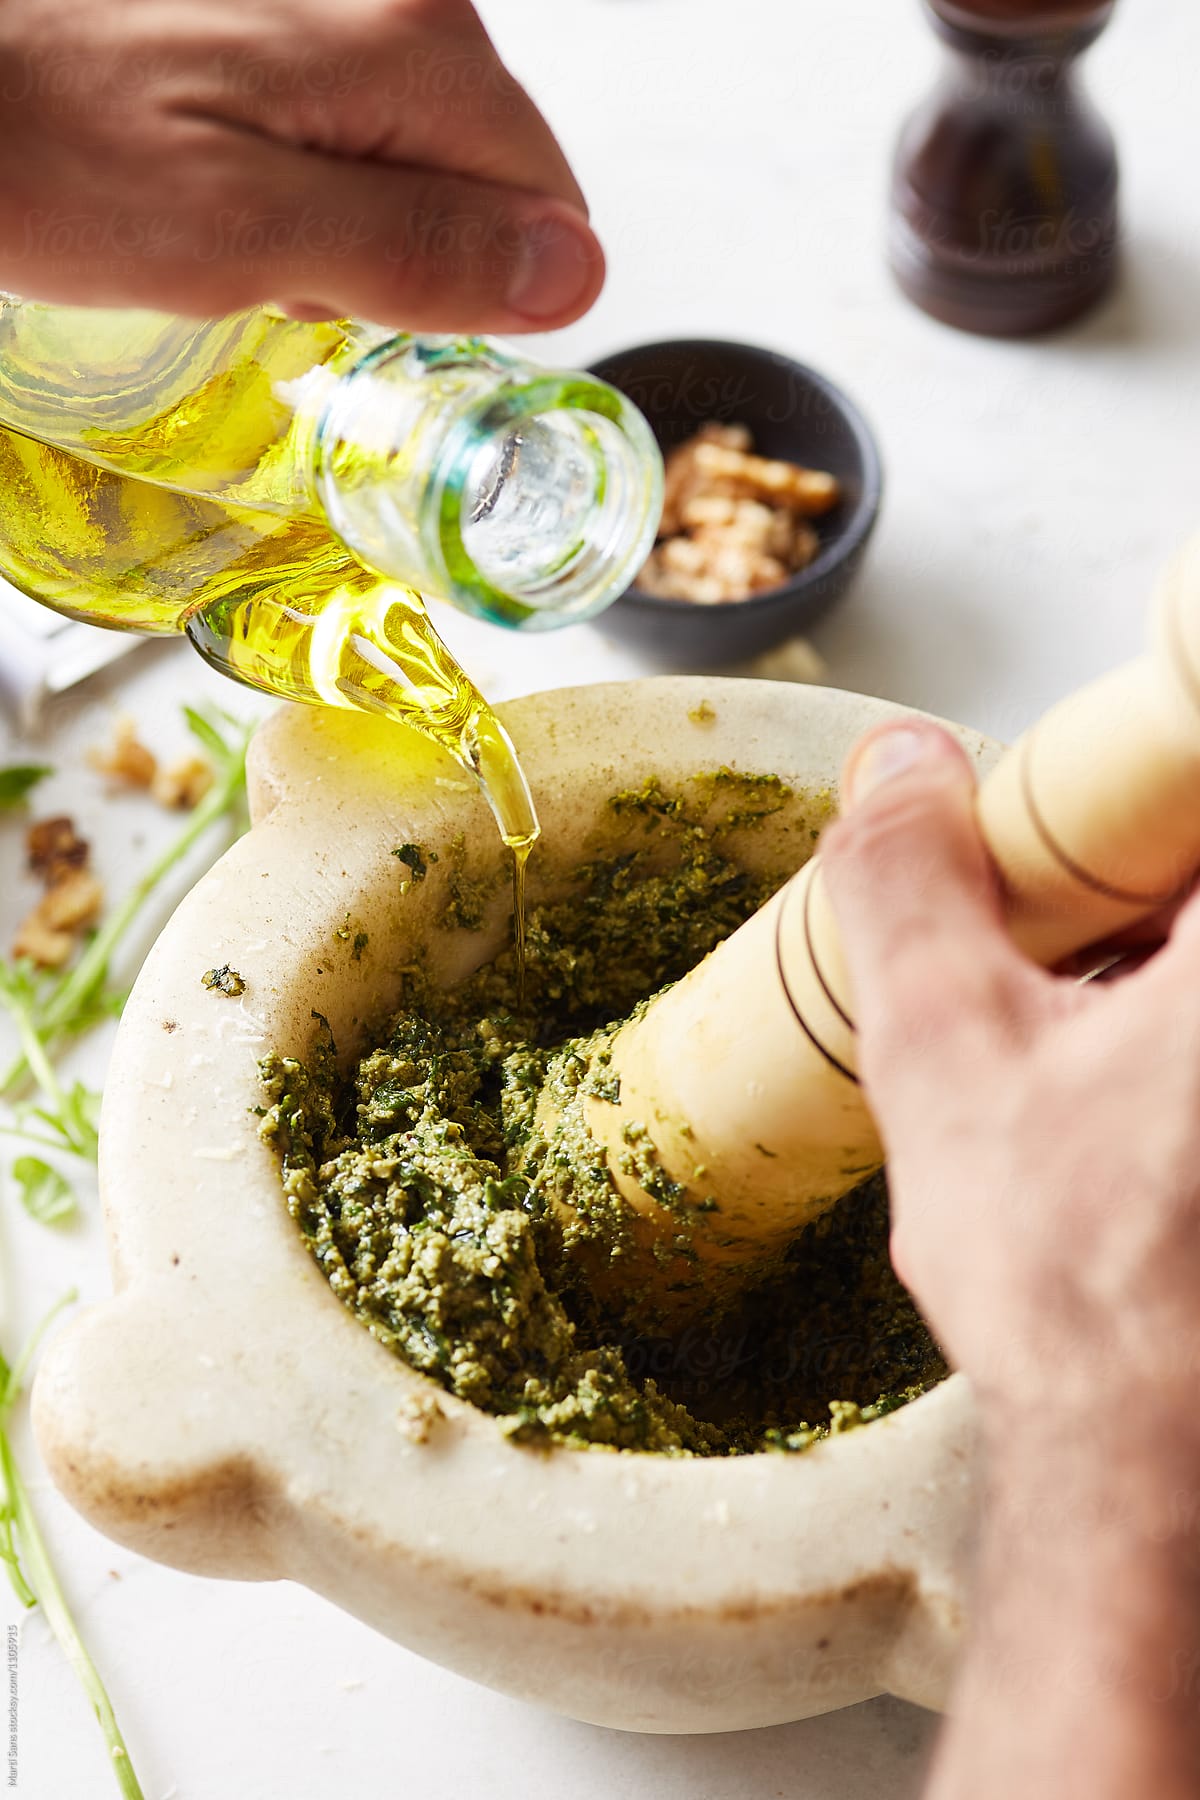 Hands adding olive oil in mortar